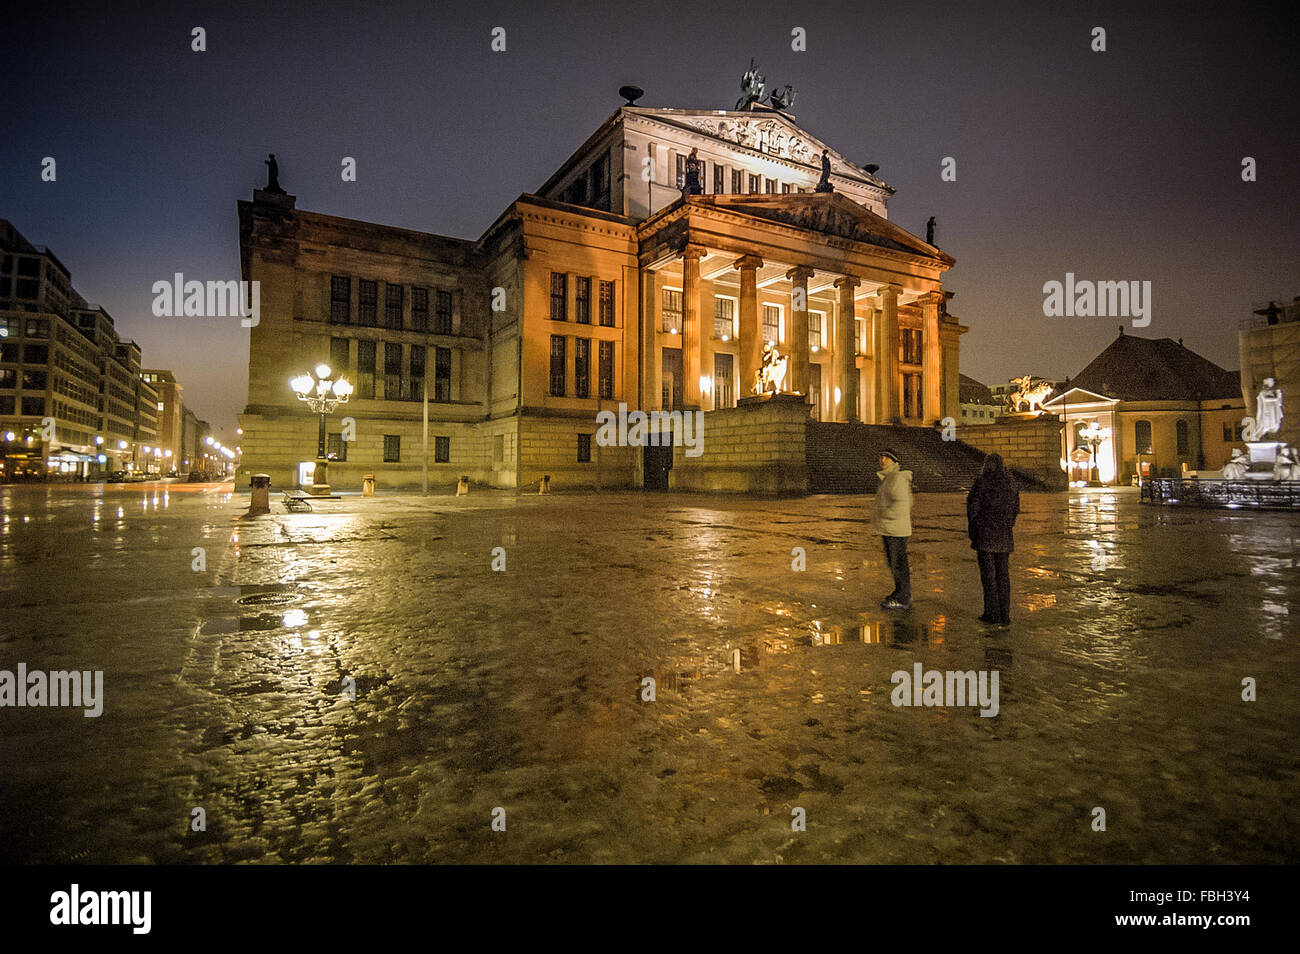 The Konzerthaus in Berlin's Gendarmenmarkt. Stock Photo